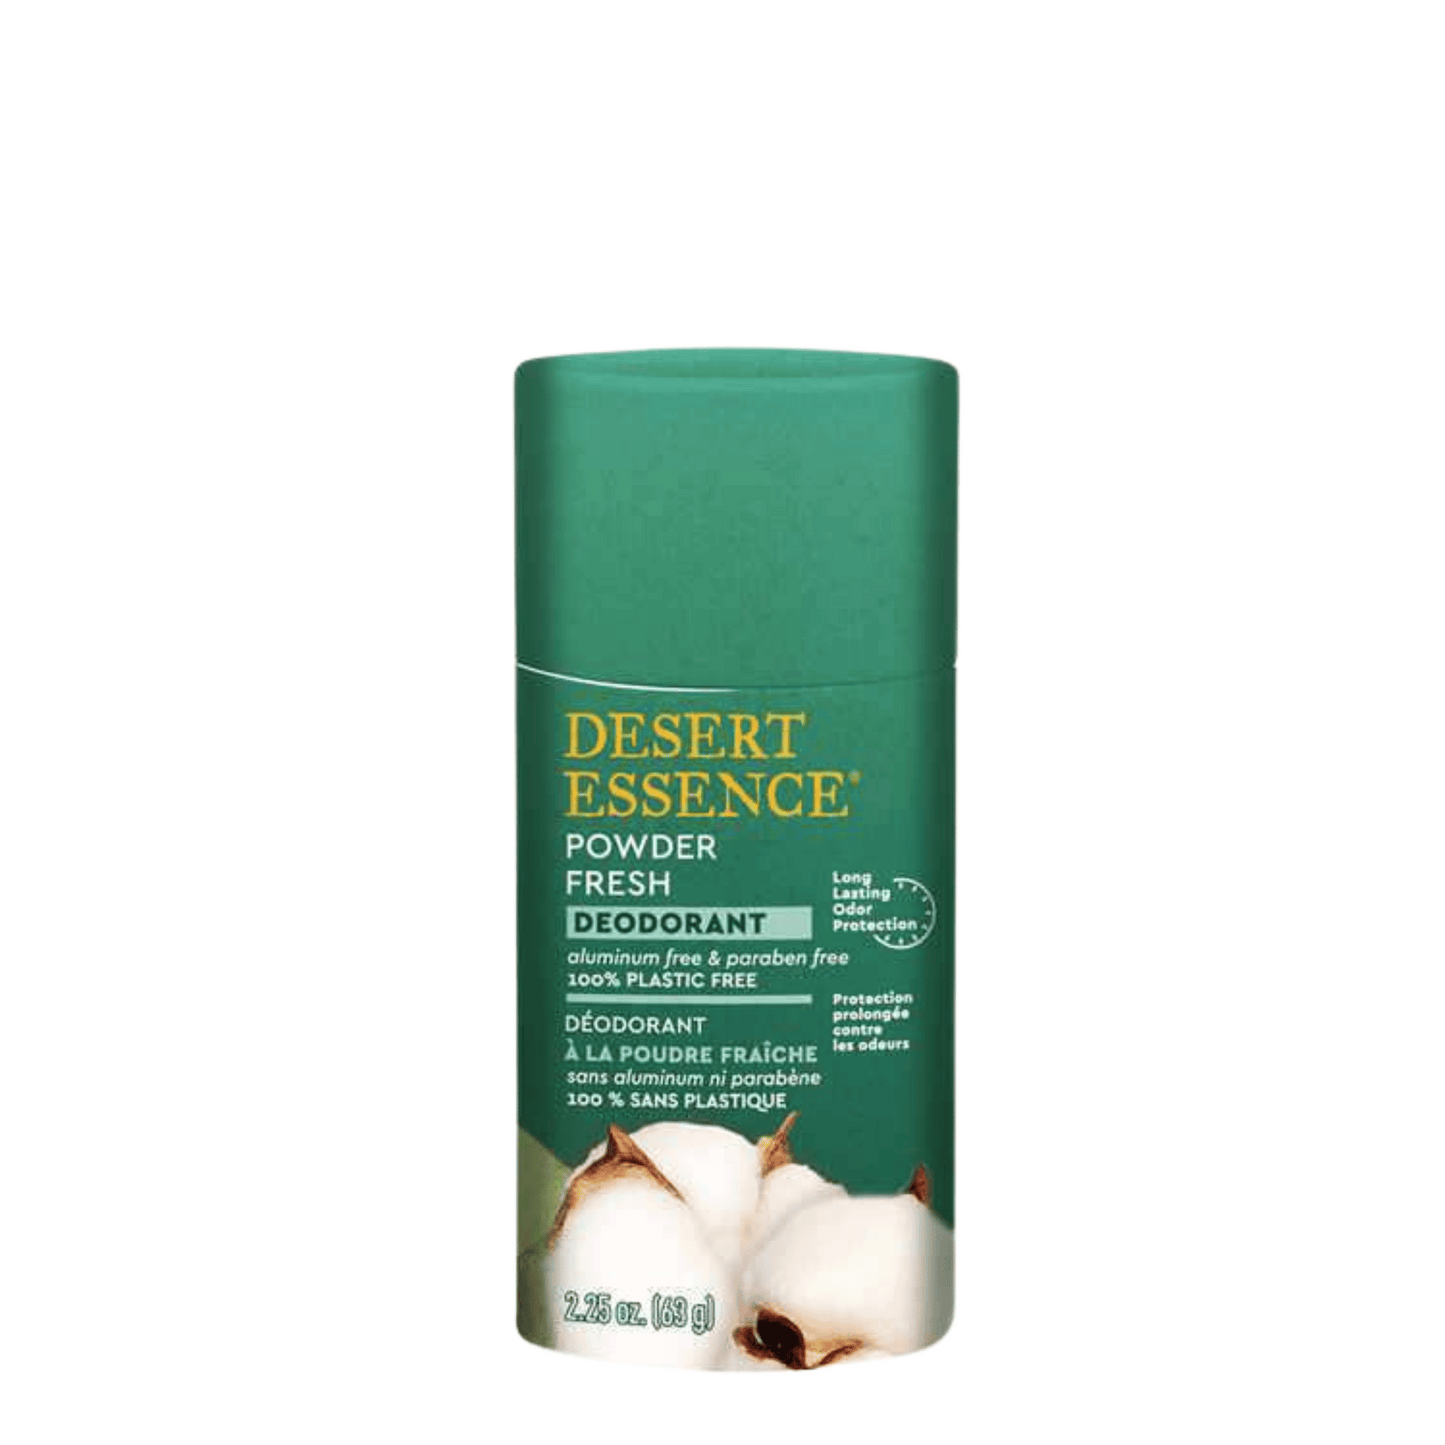 Primary Image of Powder Fresh Deodorant